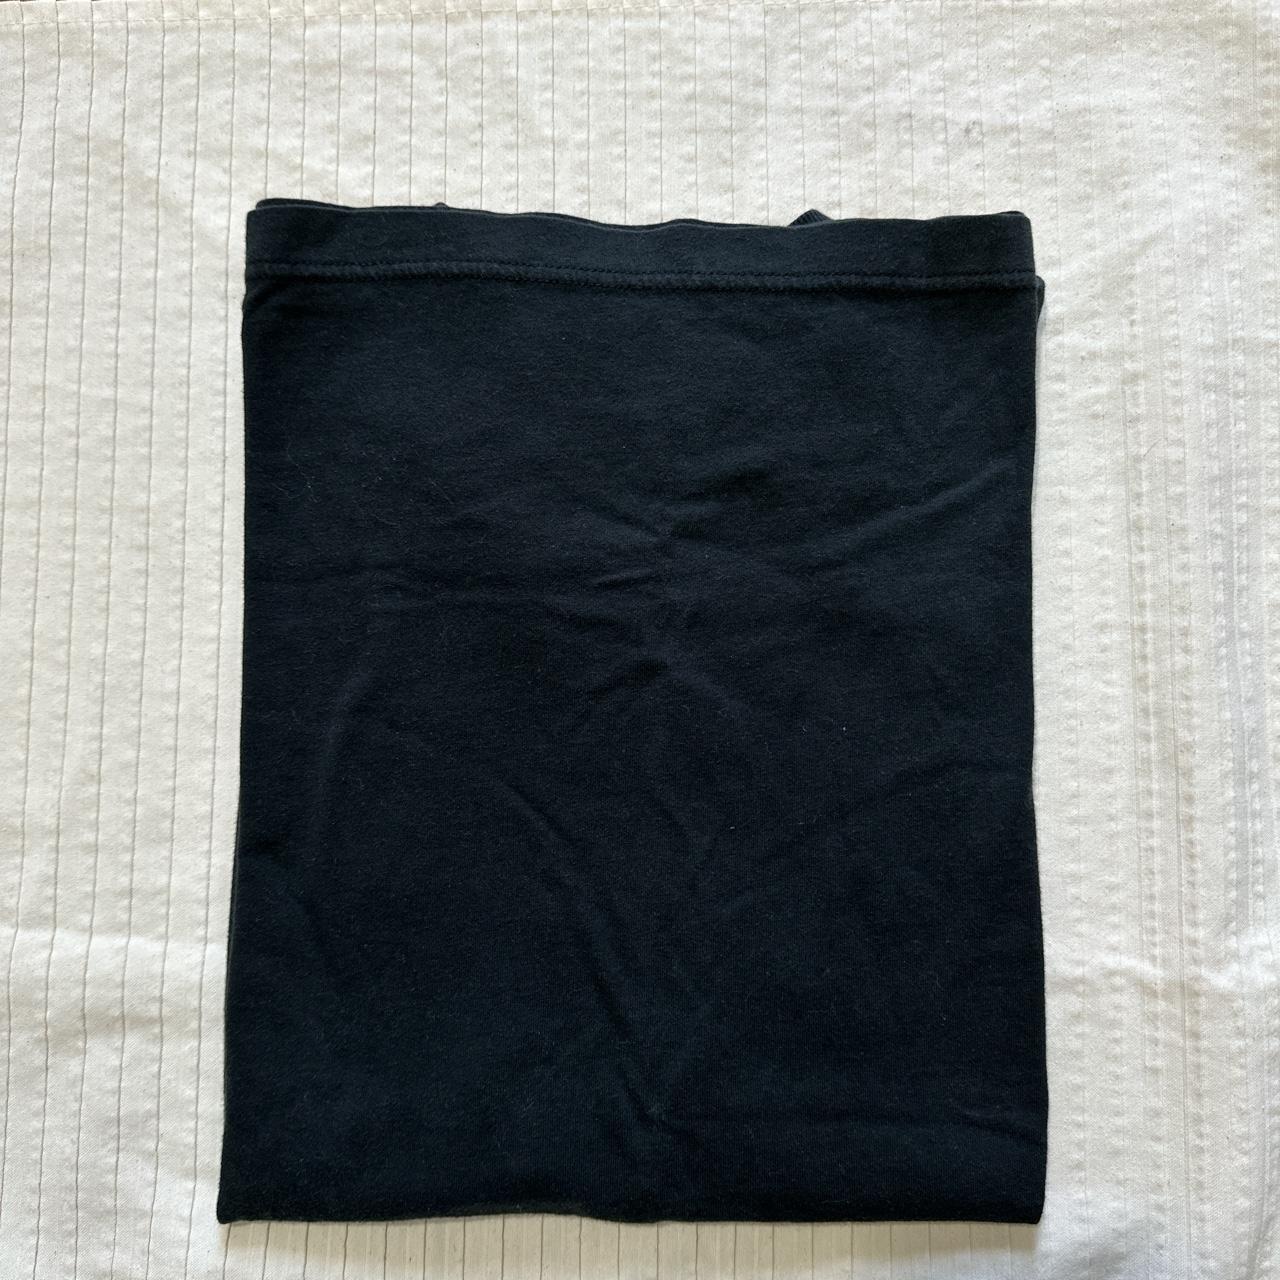 American Vintage Men's Black T-shirt (2)